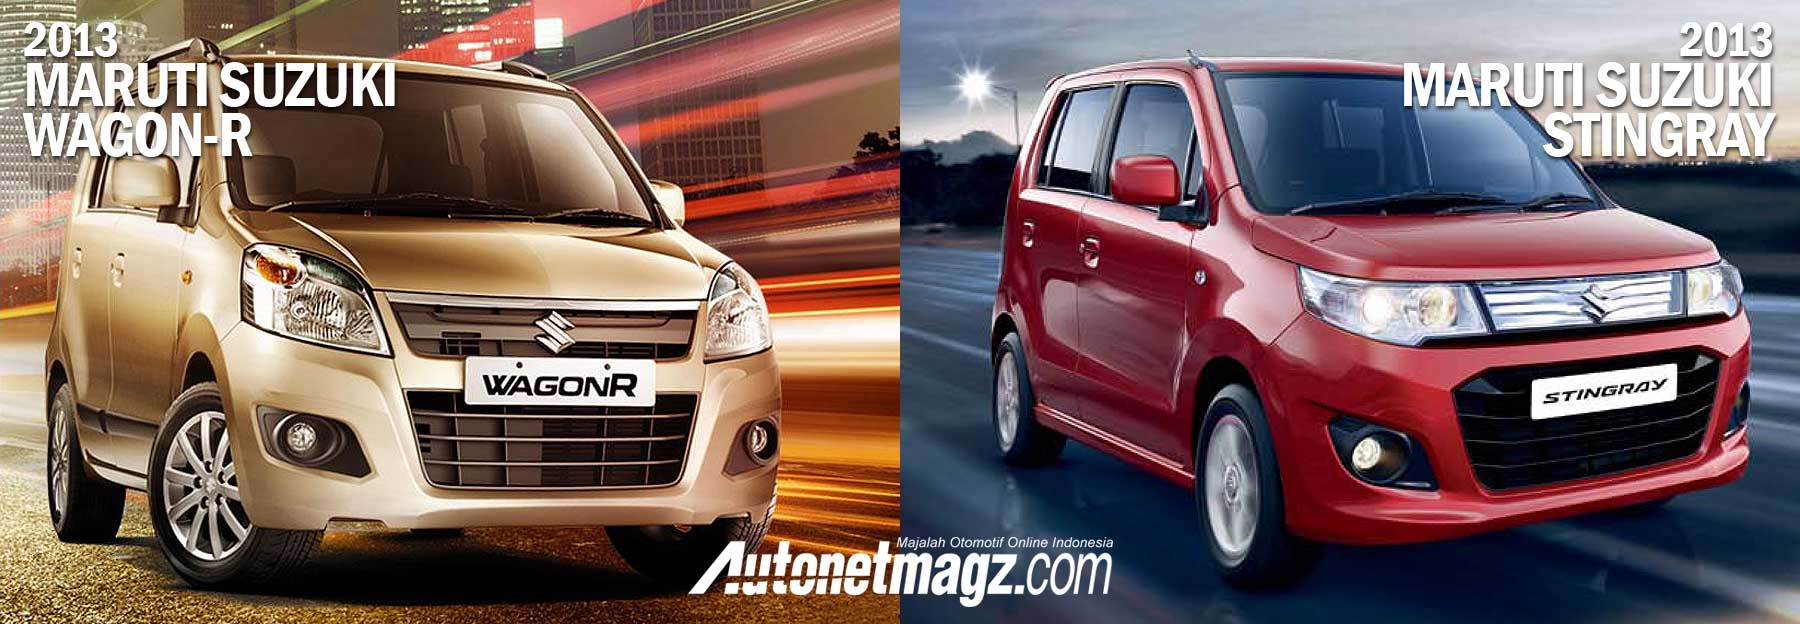 International, Perbandingan Suzuki Wagon-R & Suzuki Stingray 2013 bagian depan: Suzuki Stingray India Ternyata Sama Dengan Wagon R India